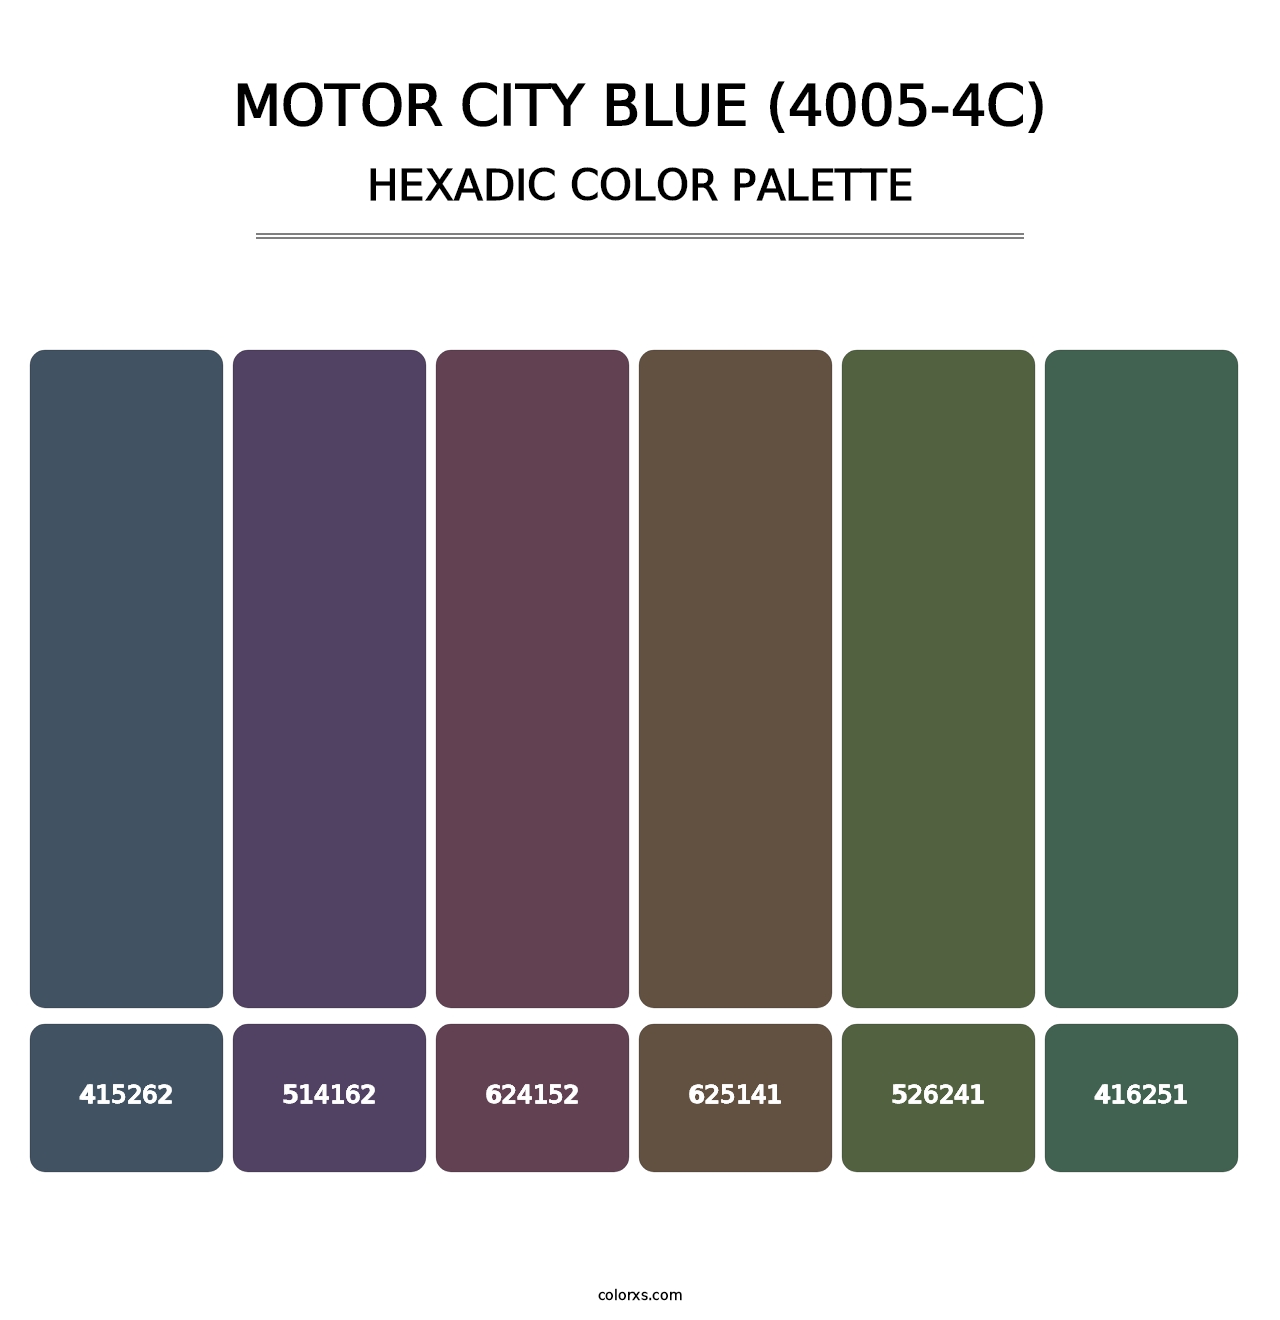 Motor City Blue (4005-4C) - Hexadic Color Palette